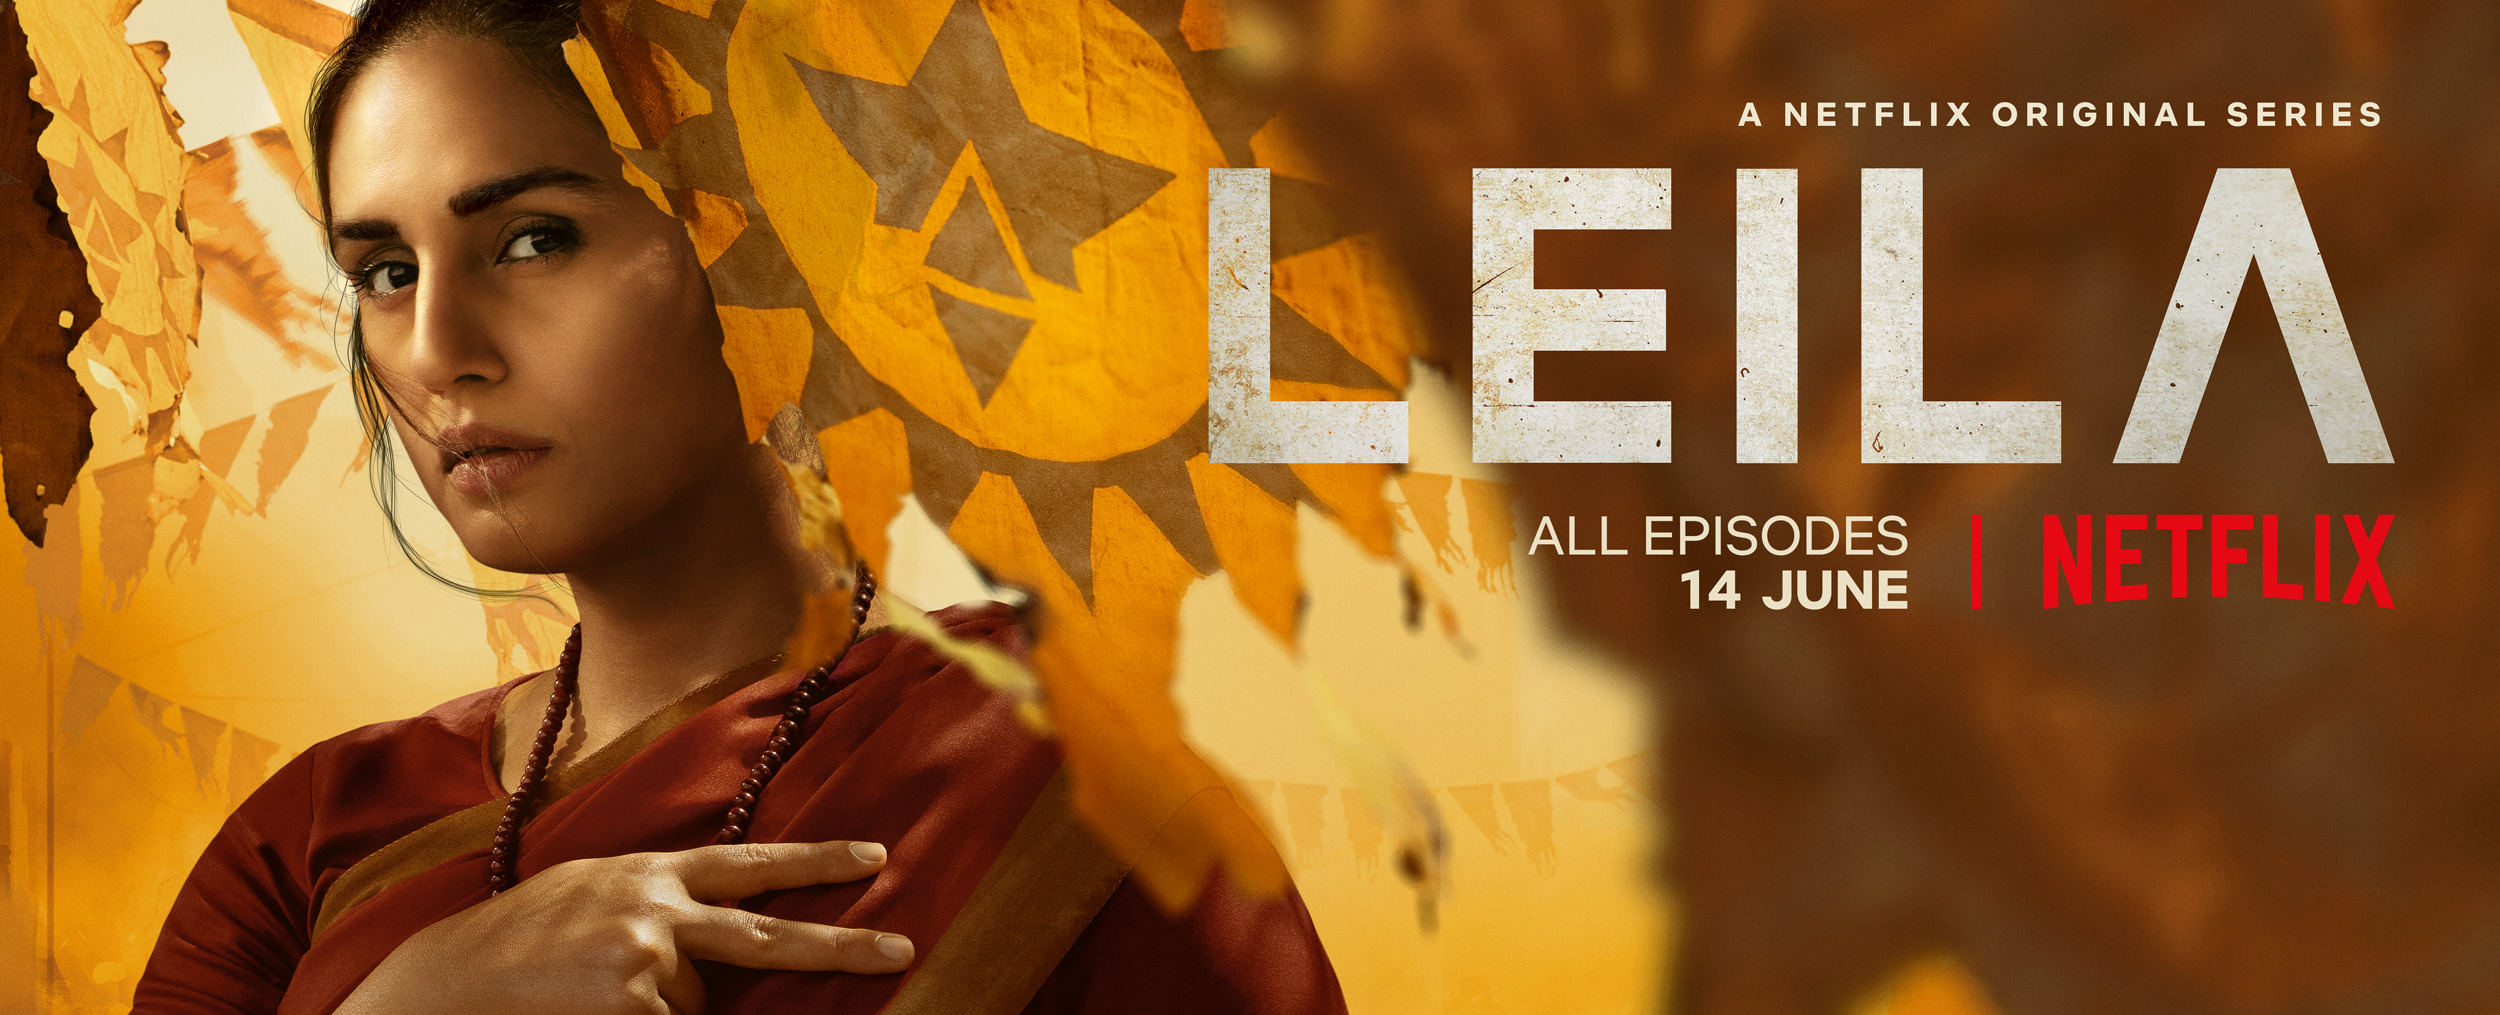 Mega Sized TV Poster Image for Leila (#6 of 7)